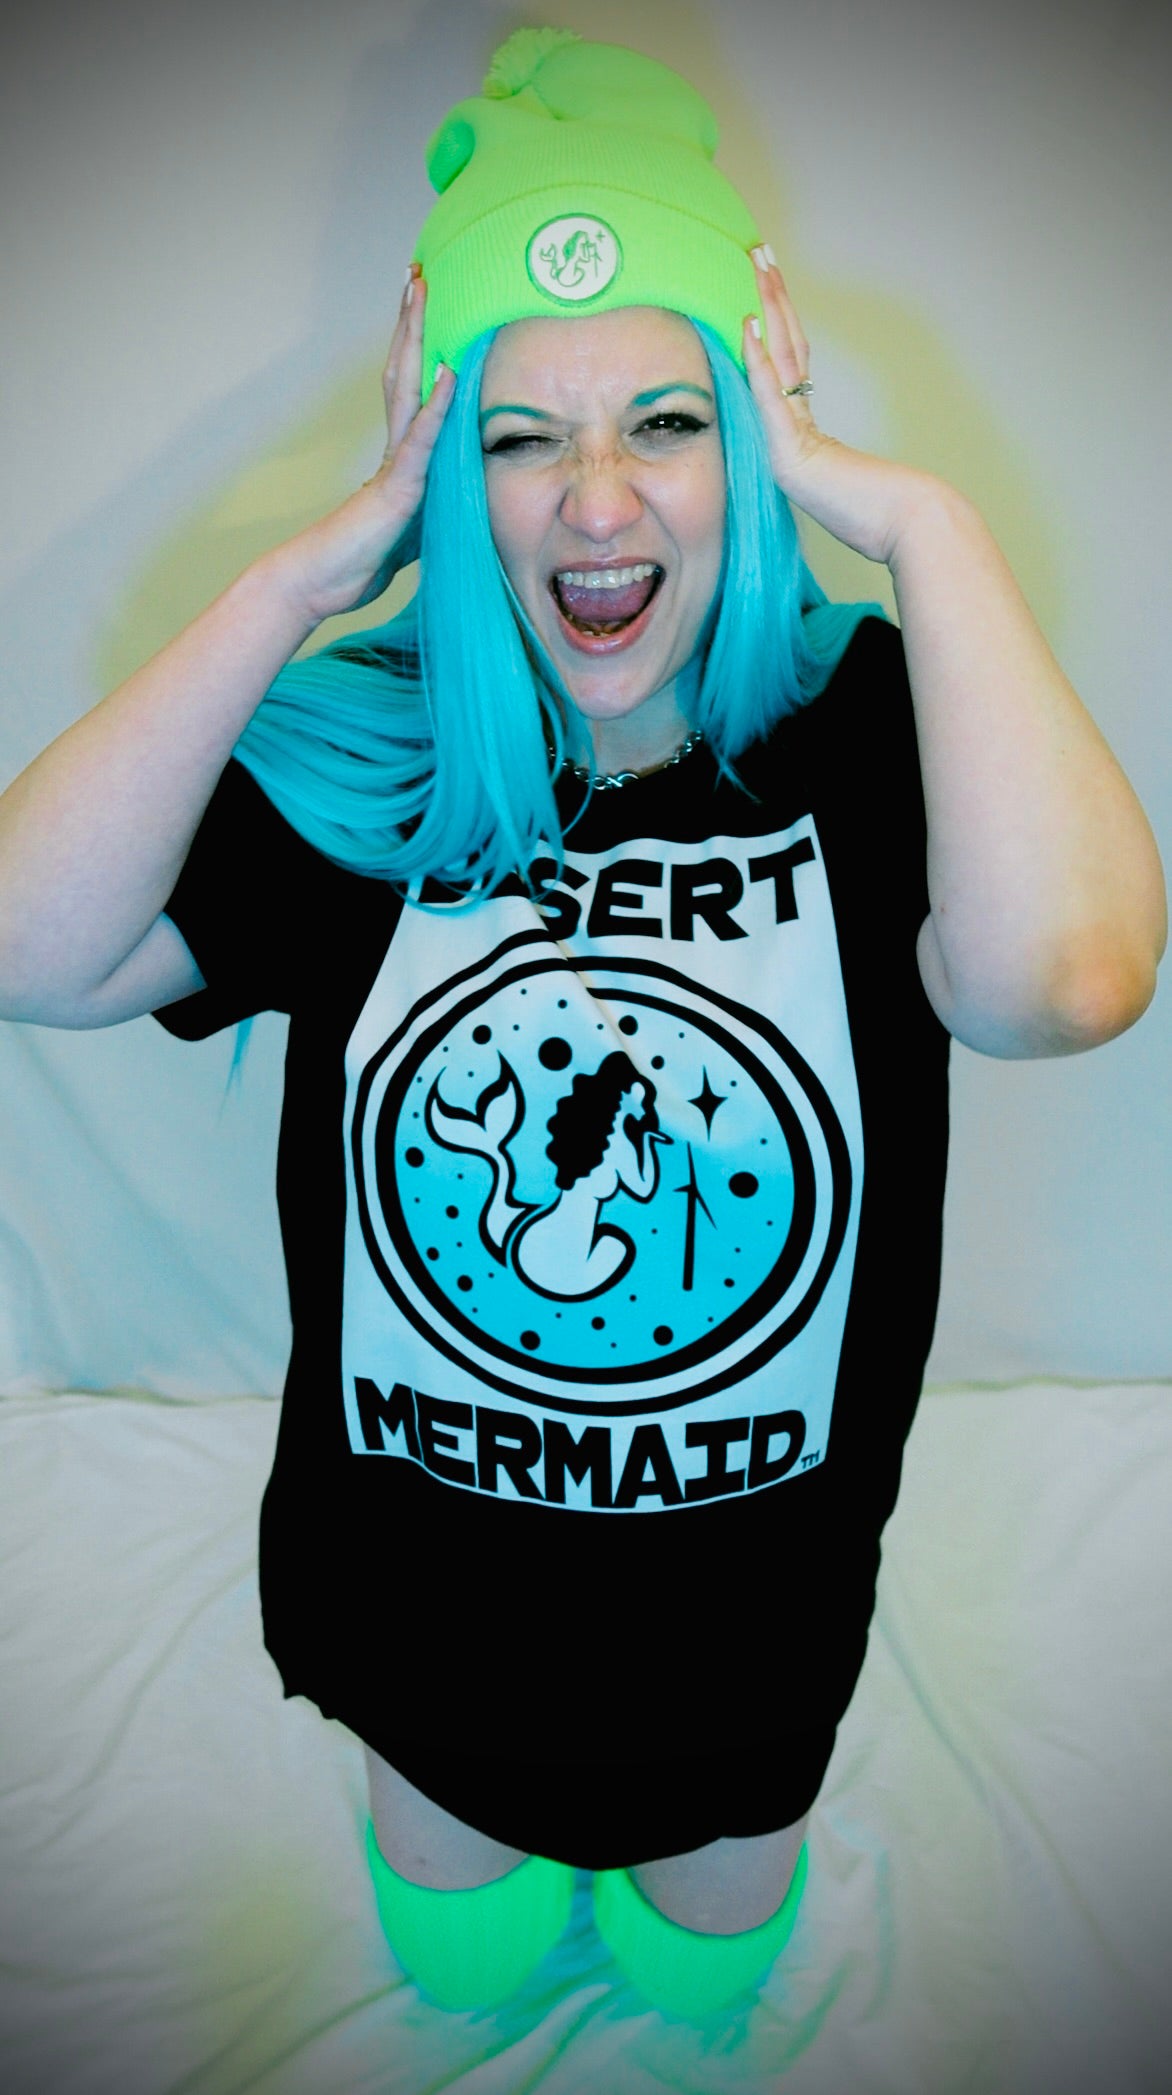 Desert Mermaid Logo Graphic Black Heather Unisex T-shirt in Sky Blue Ombre